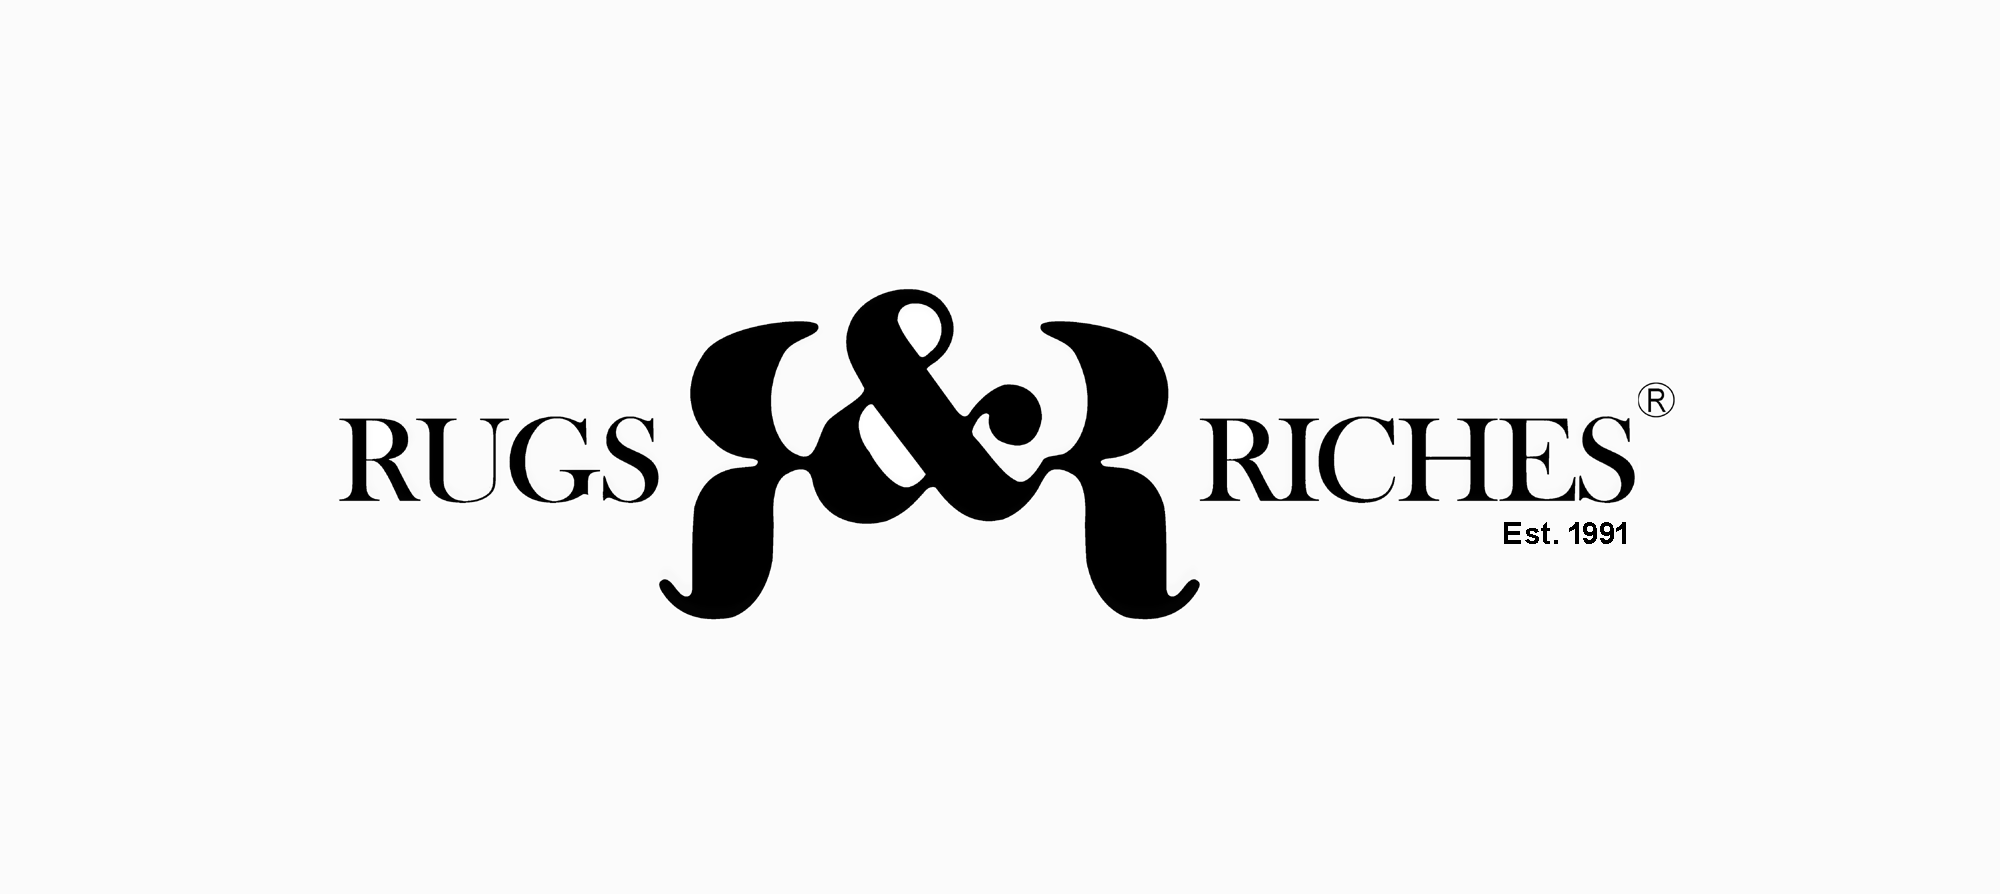 Rugs & Riches Inc